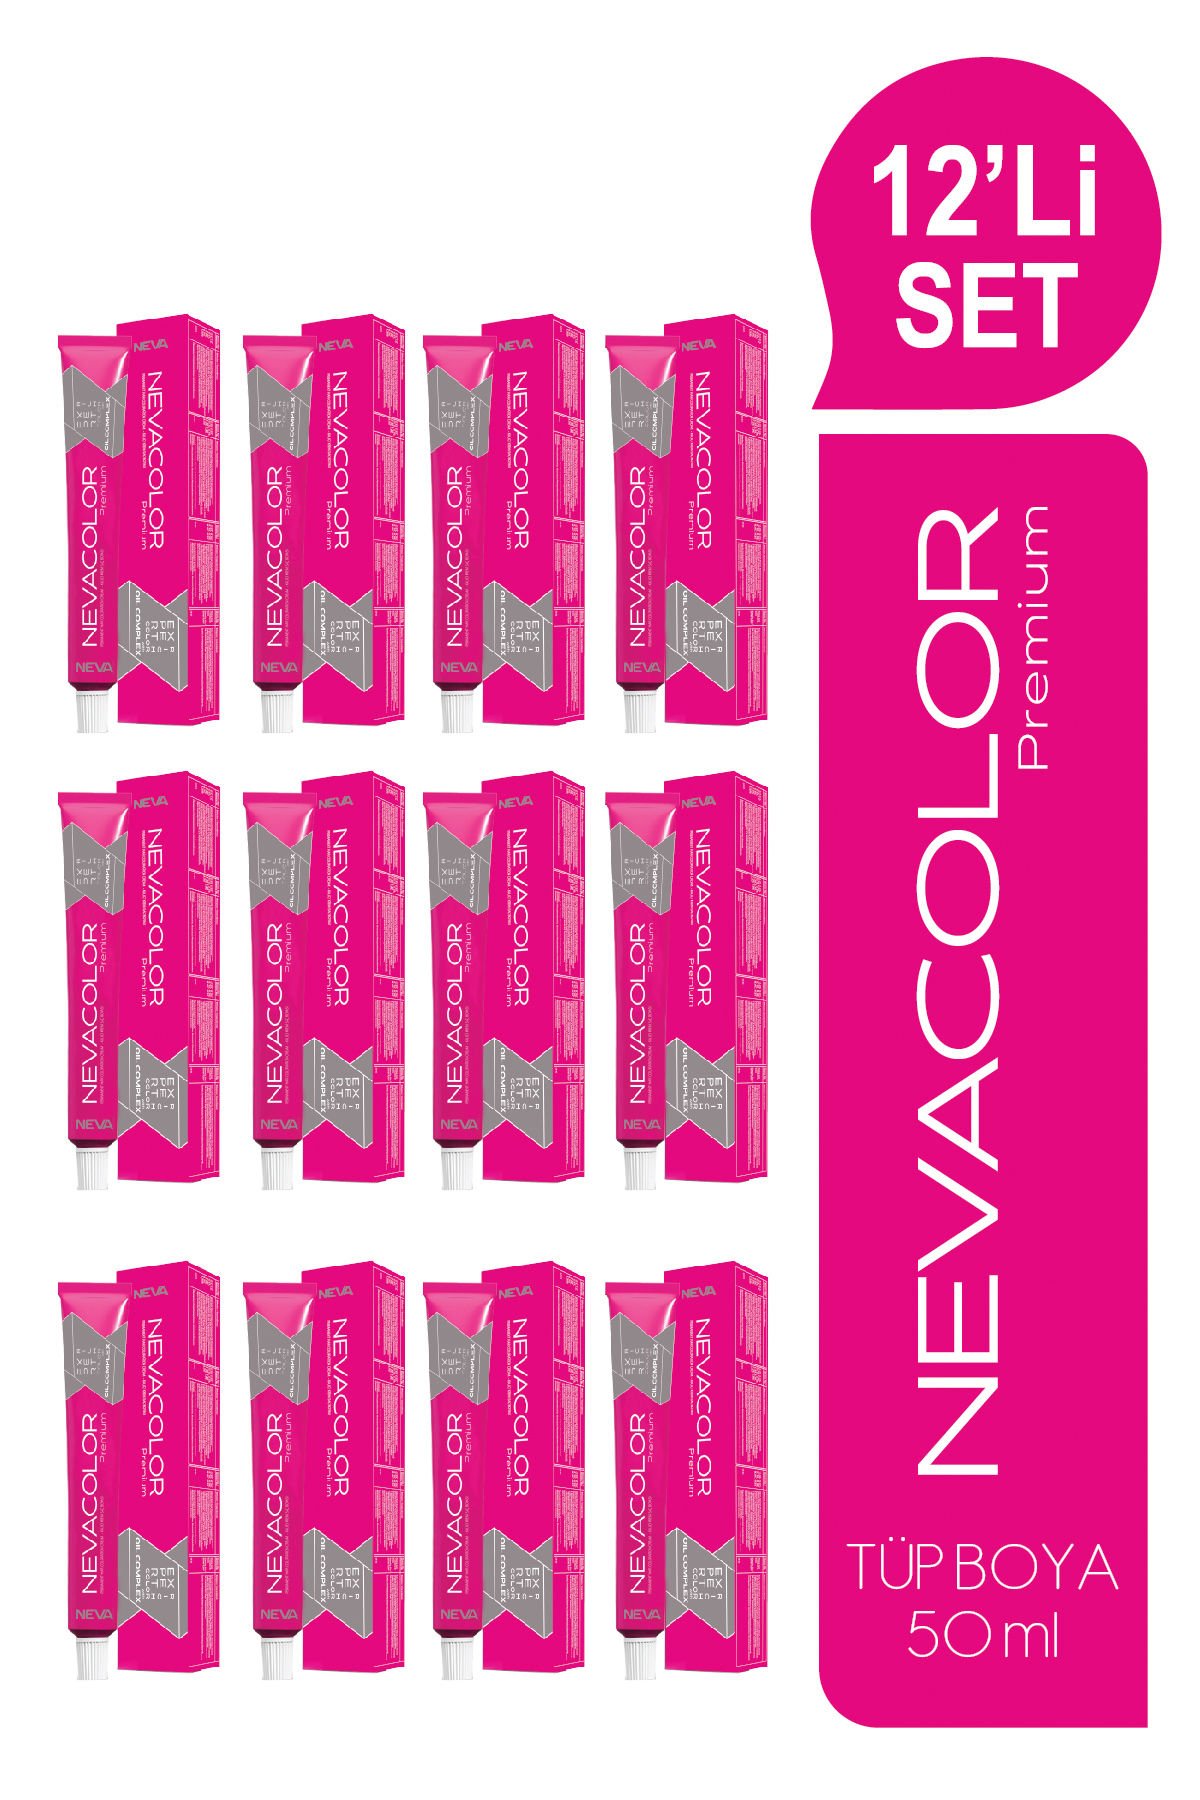 NEVACOLOR Premium 12'Lİ SET  6.35 ÇİKOLATA KARAMEL Kalıcı Krem Saç Boyası (50ml x 12 adet)